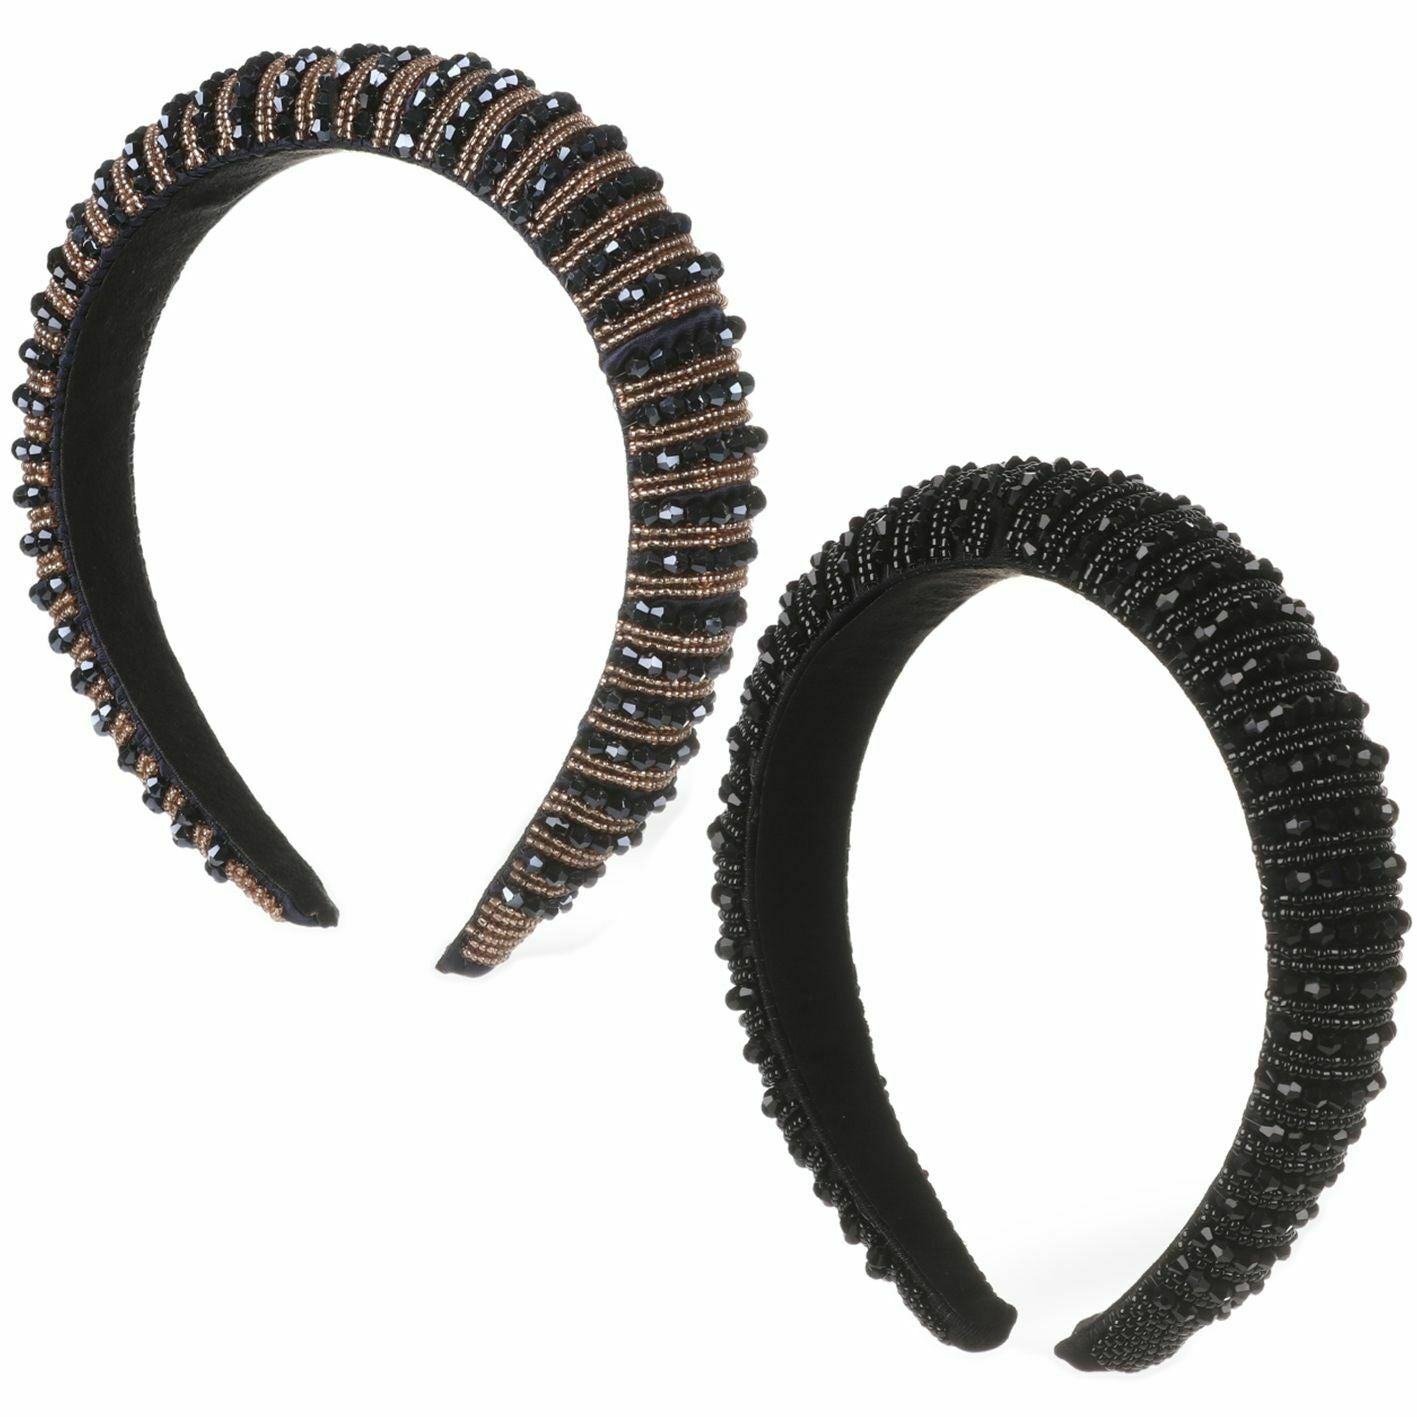 Baroque Hair Accessories Handmade Head wrap Headdress Rhinestone hairband